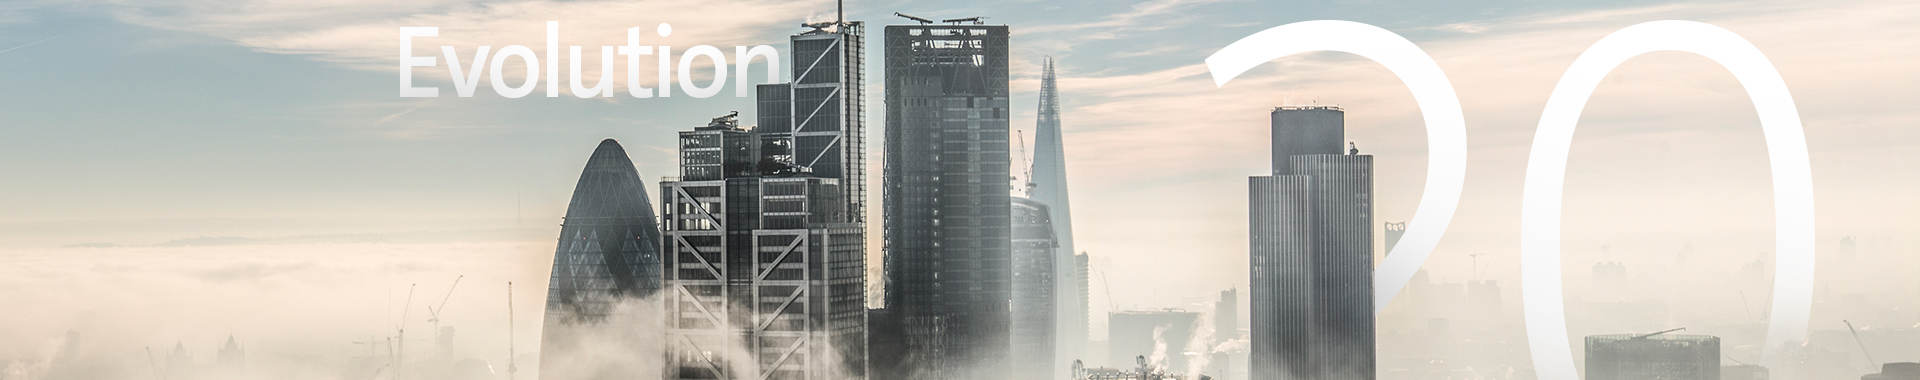 Evolution 2020: London skyline emerging from the mist